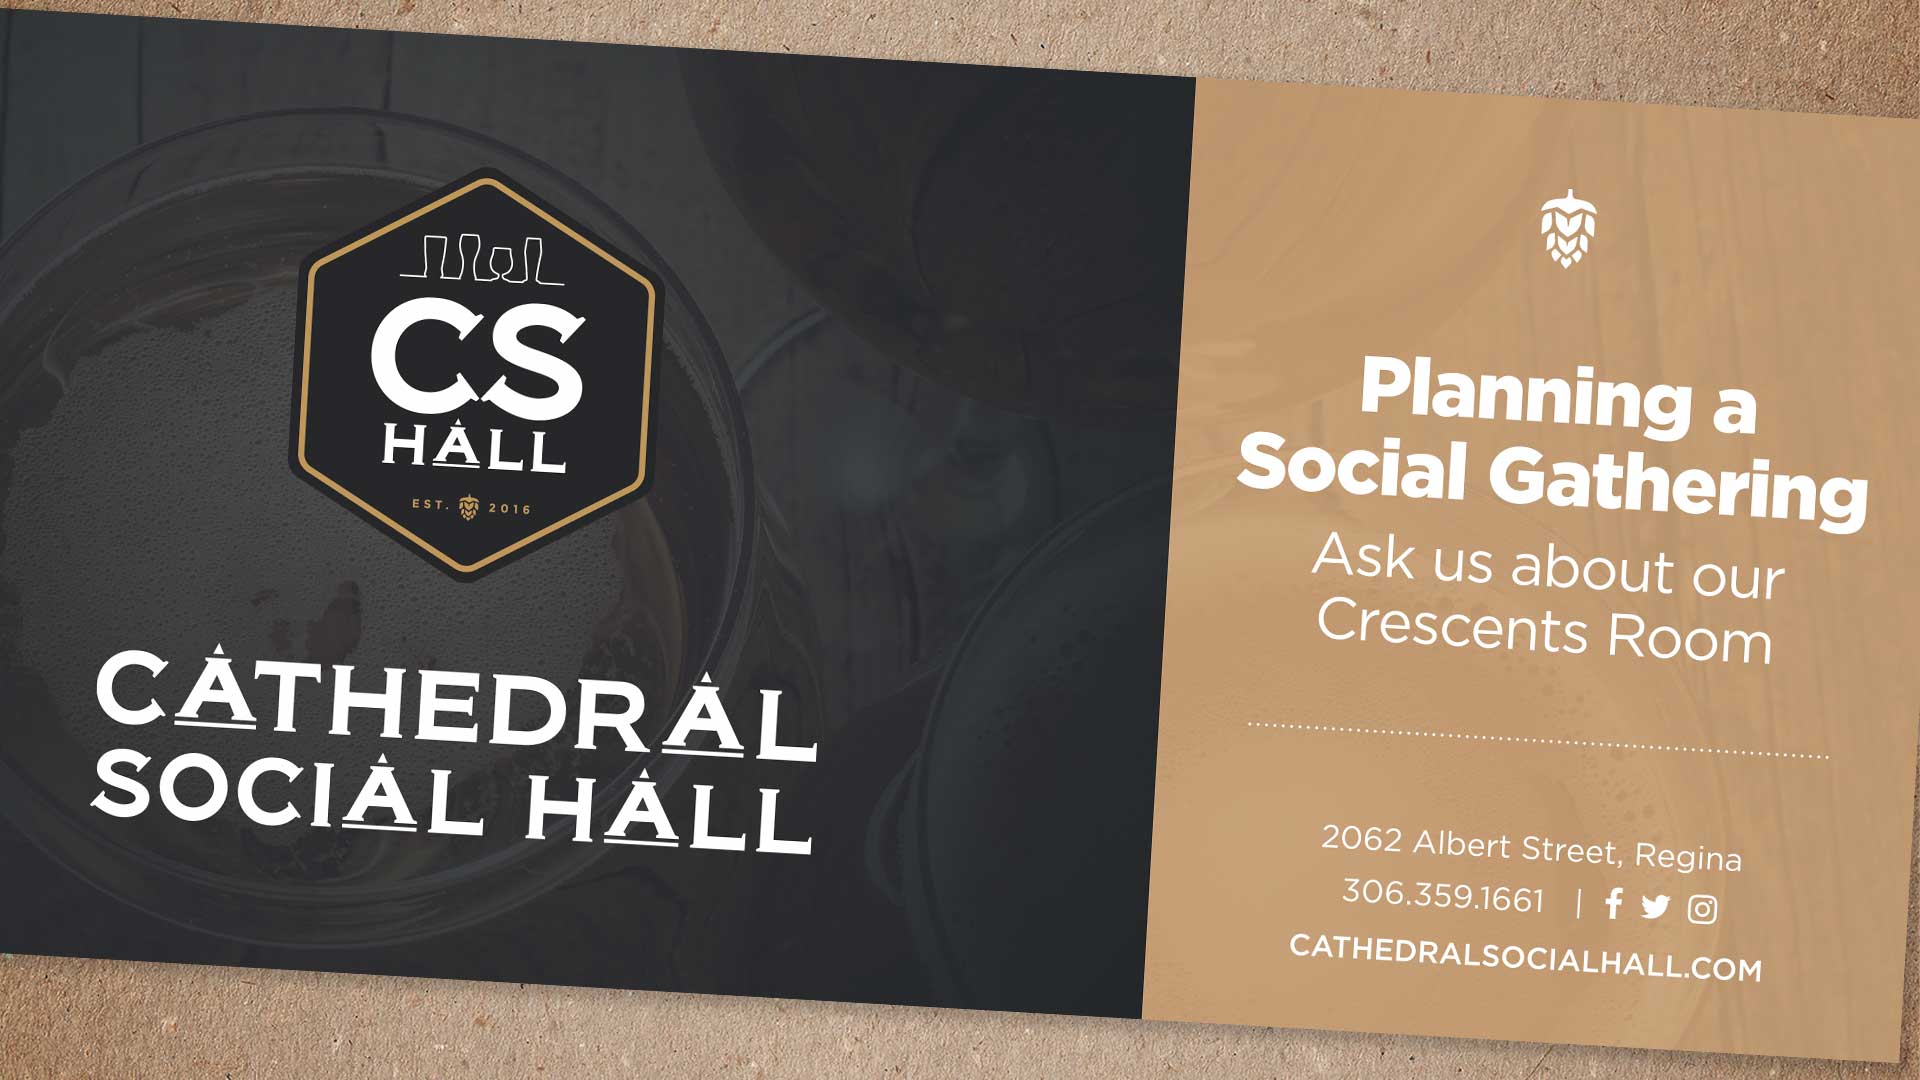 Cathedral Social Hall, Design, Cathedral Social Hall Brunch Mailer (AdMail), Portfolio Image, Cathedral Social Hall AdMail - Social Gathering